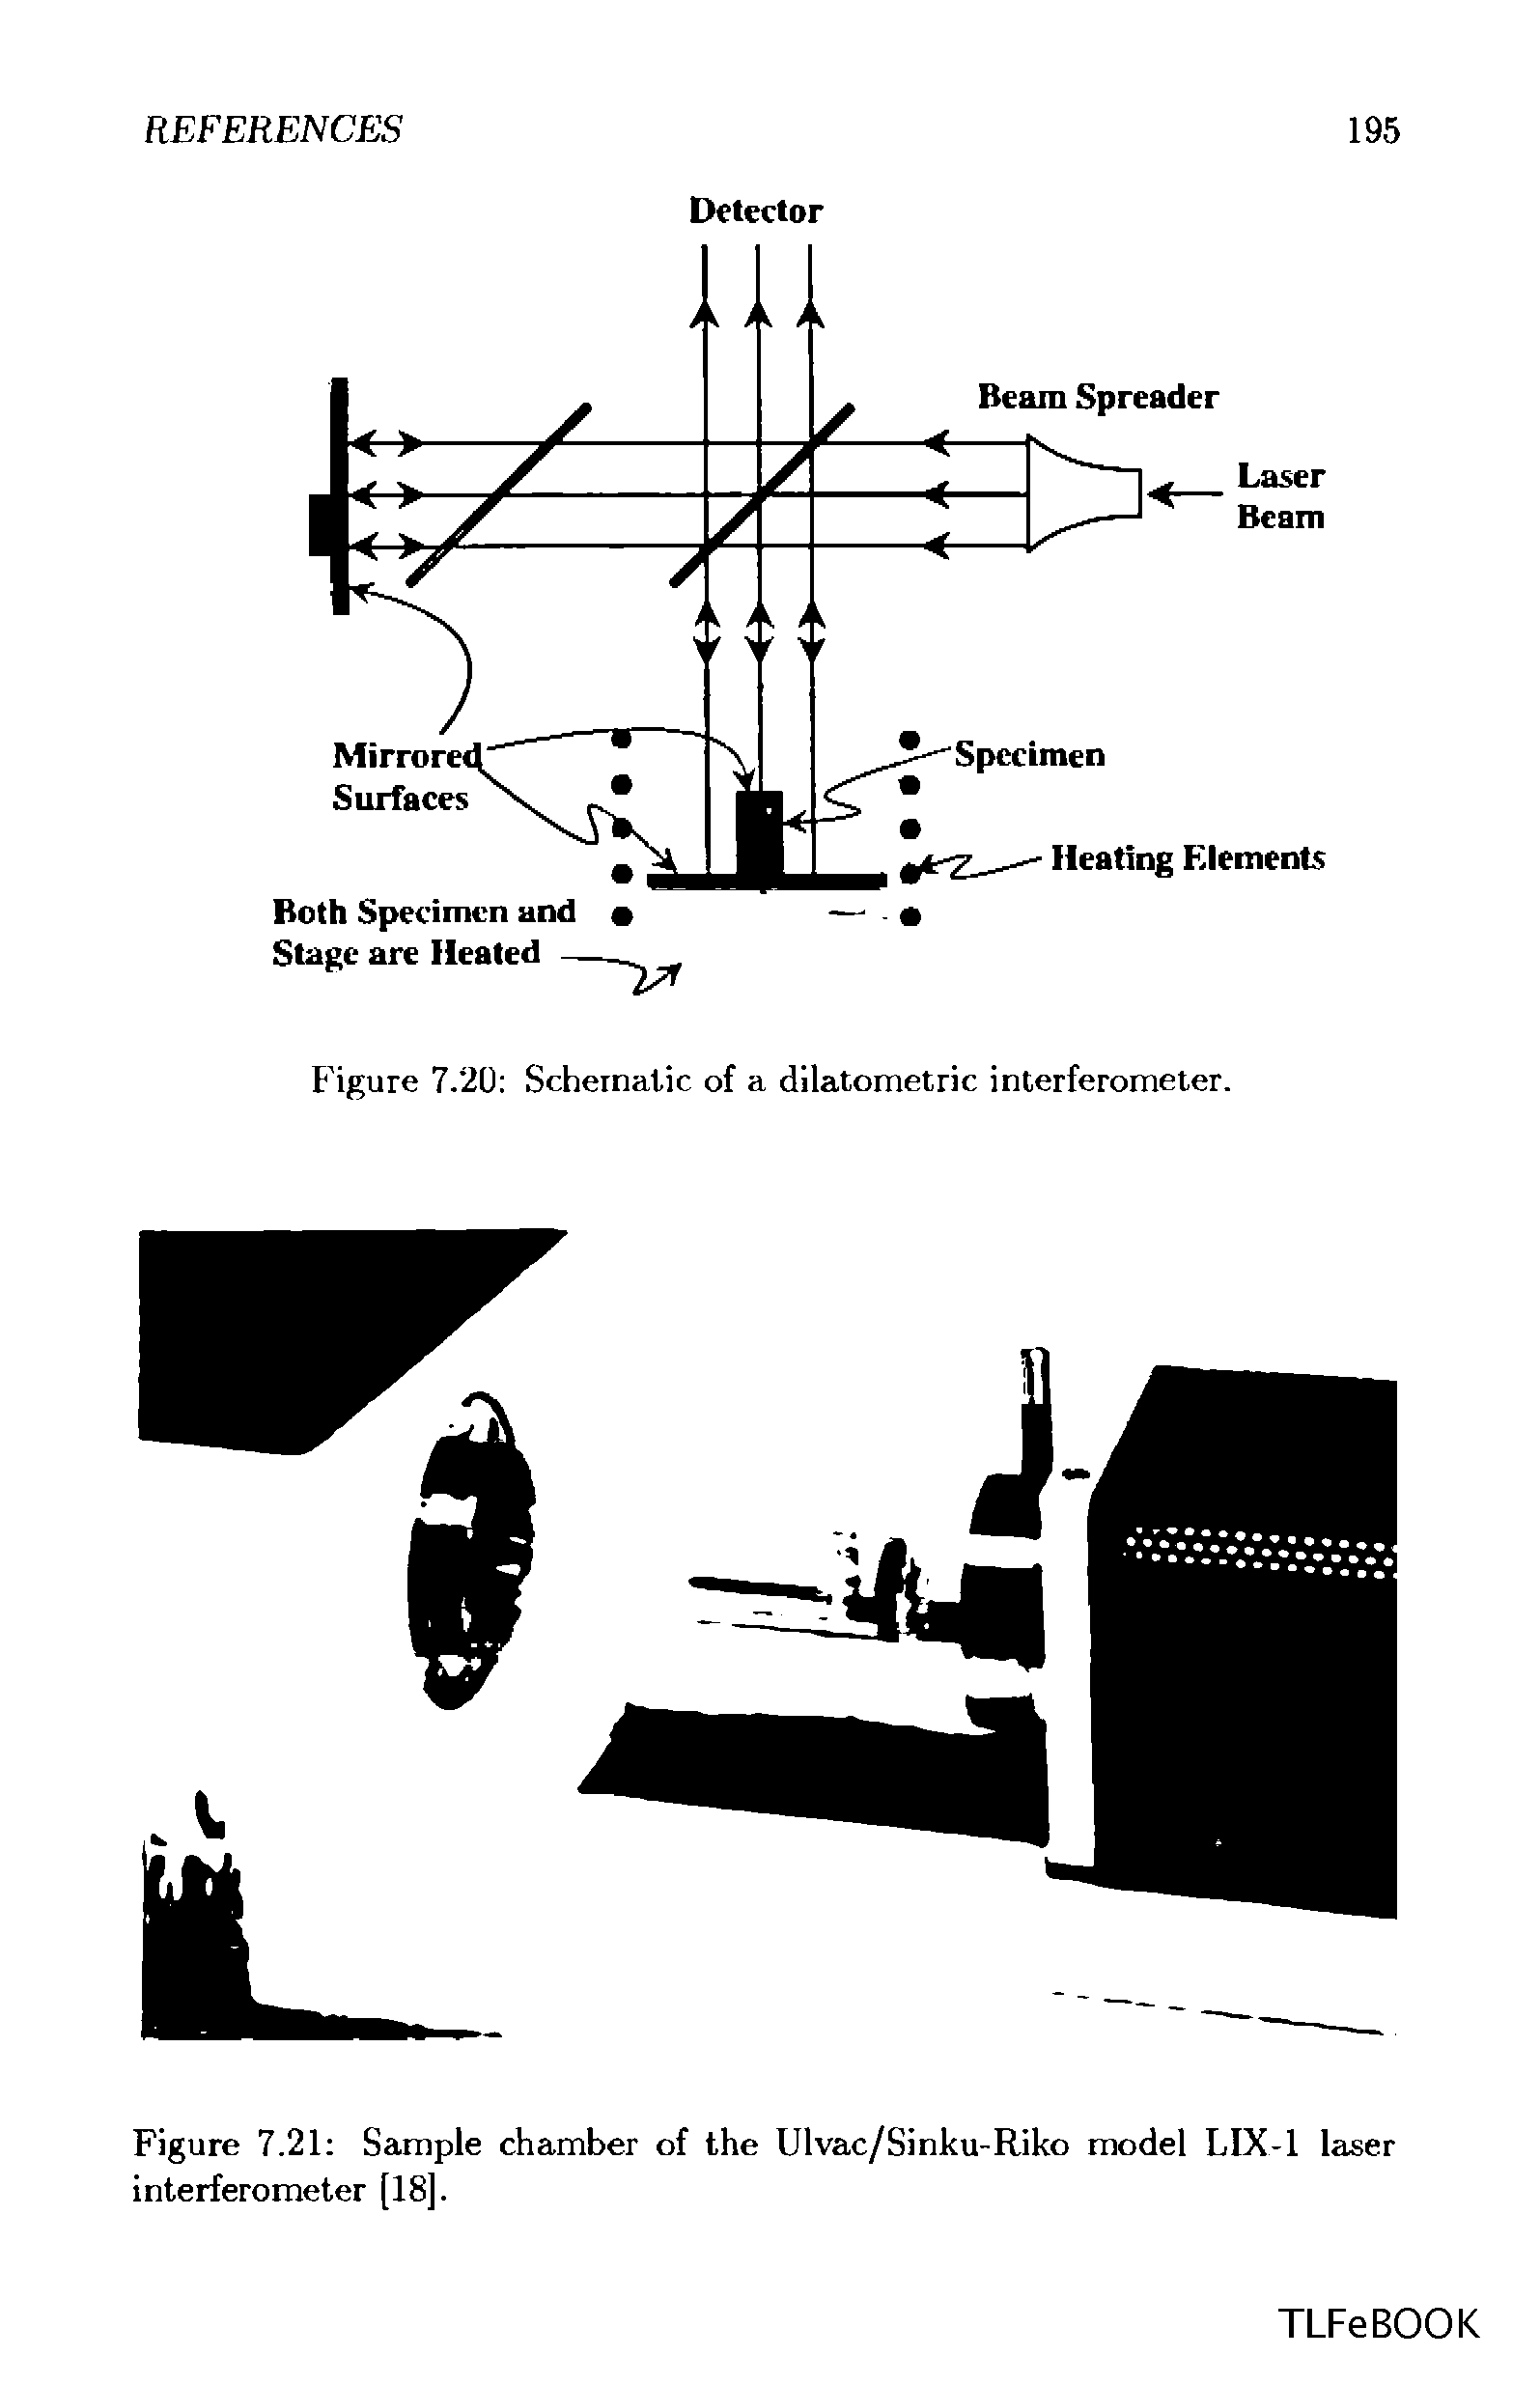 Figure 7.21 Sample chamber of the Ulvac/Sinku-Riko model LIX-1 laser interferometer [18].